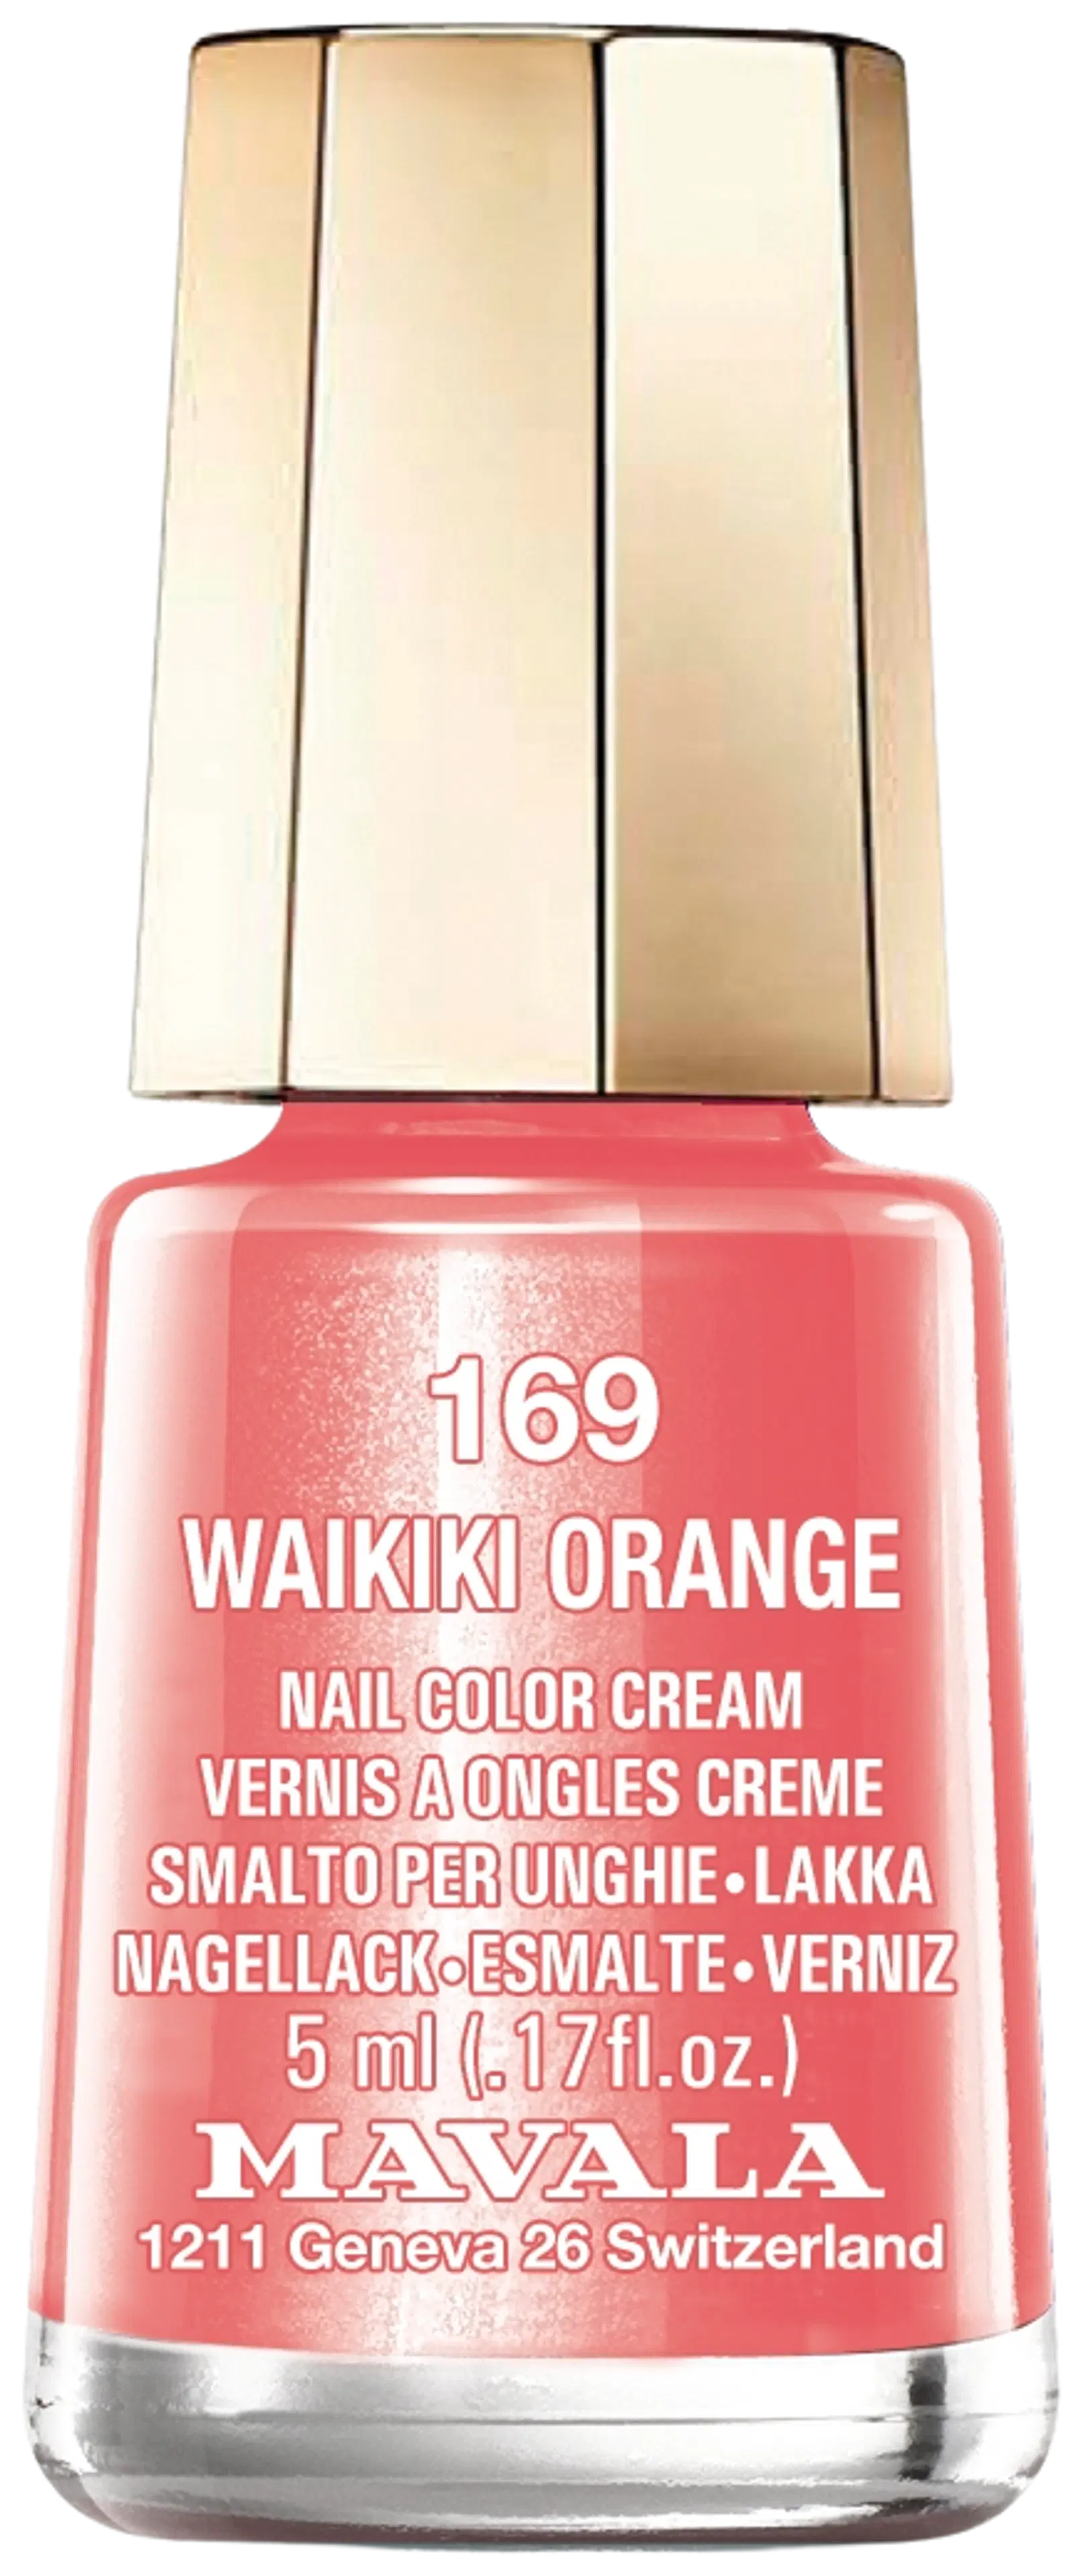 Mavala 5ml Nail Color Cream 169 Waikiki Orange kynsilakka